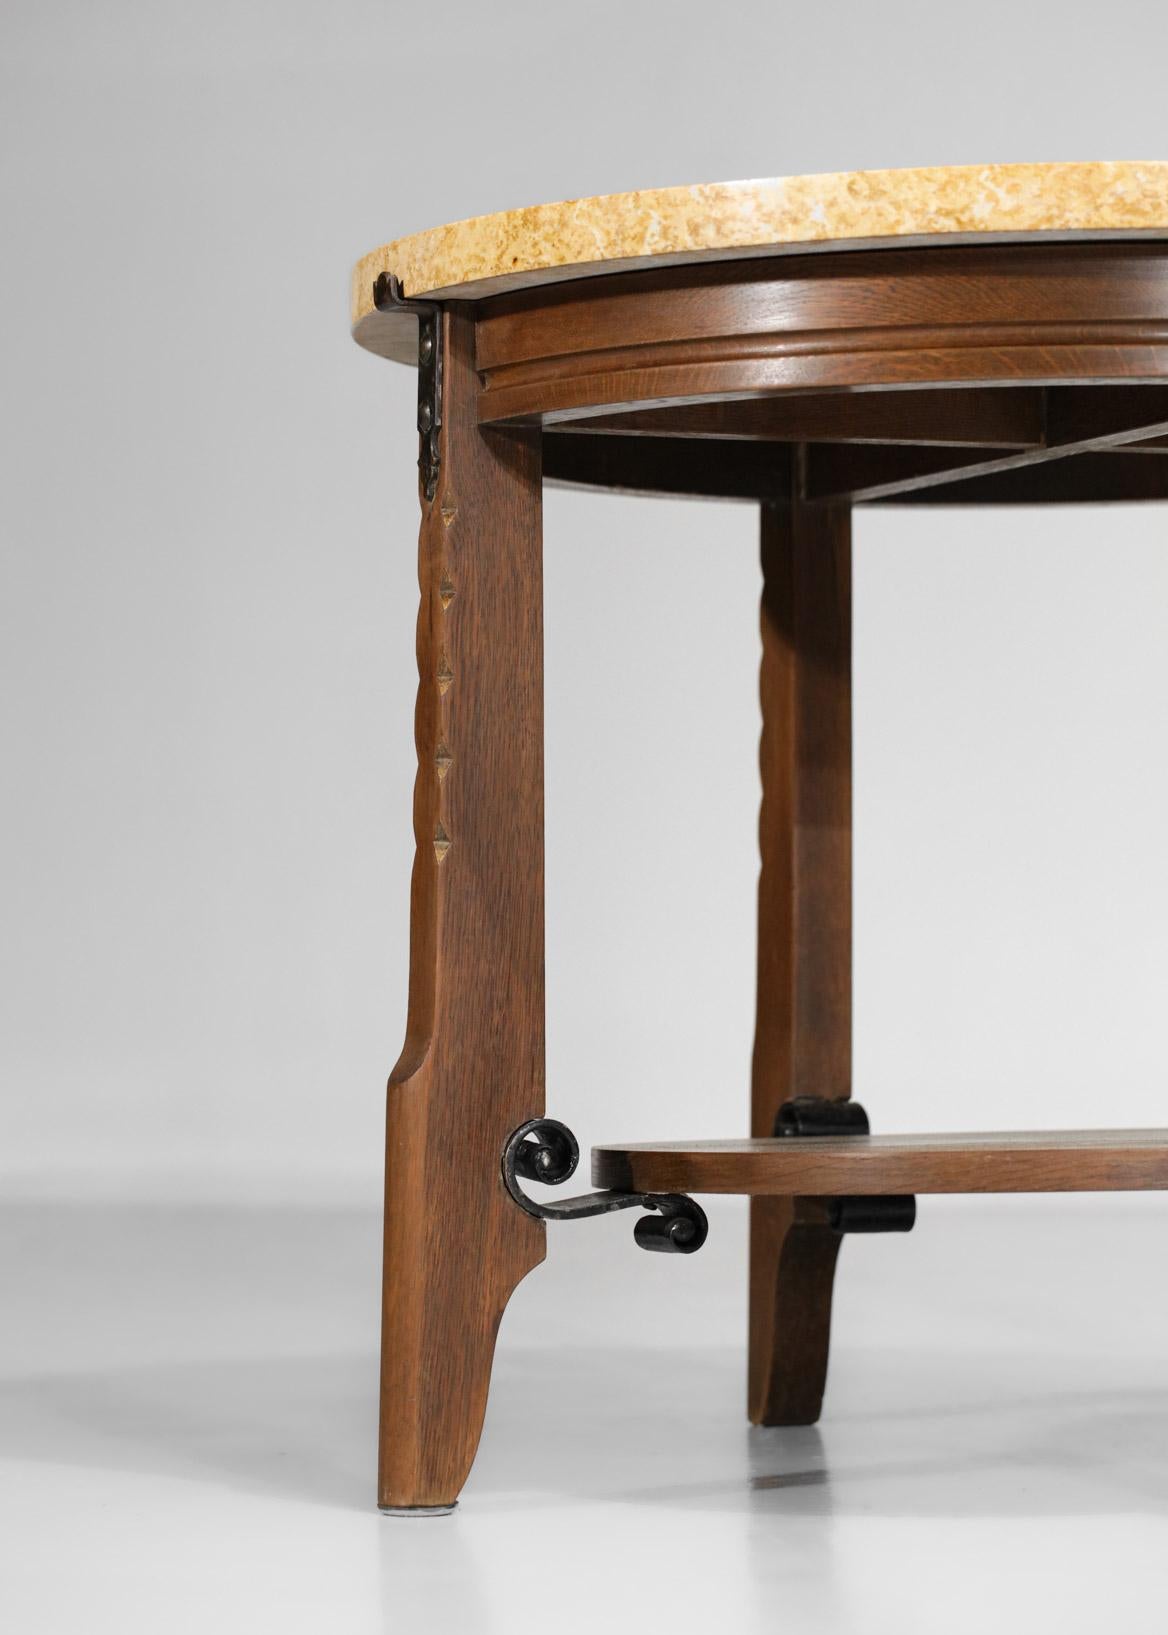 Oak and Travertine Art Deco Coffee Table 1930's Gueridon, E556 For Sale 1